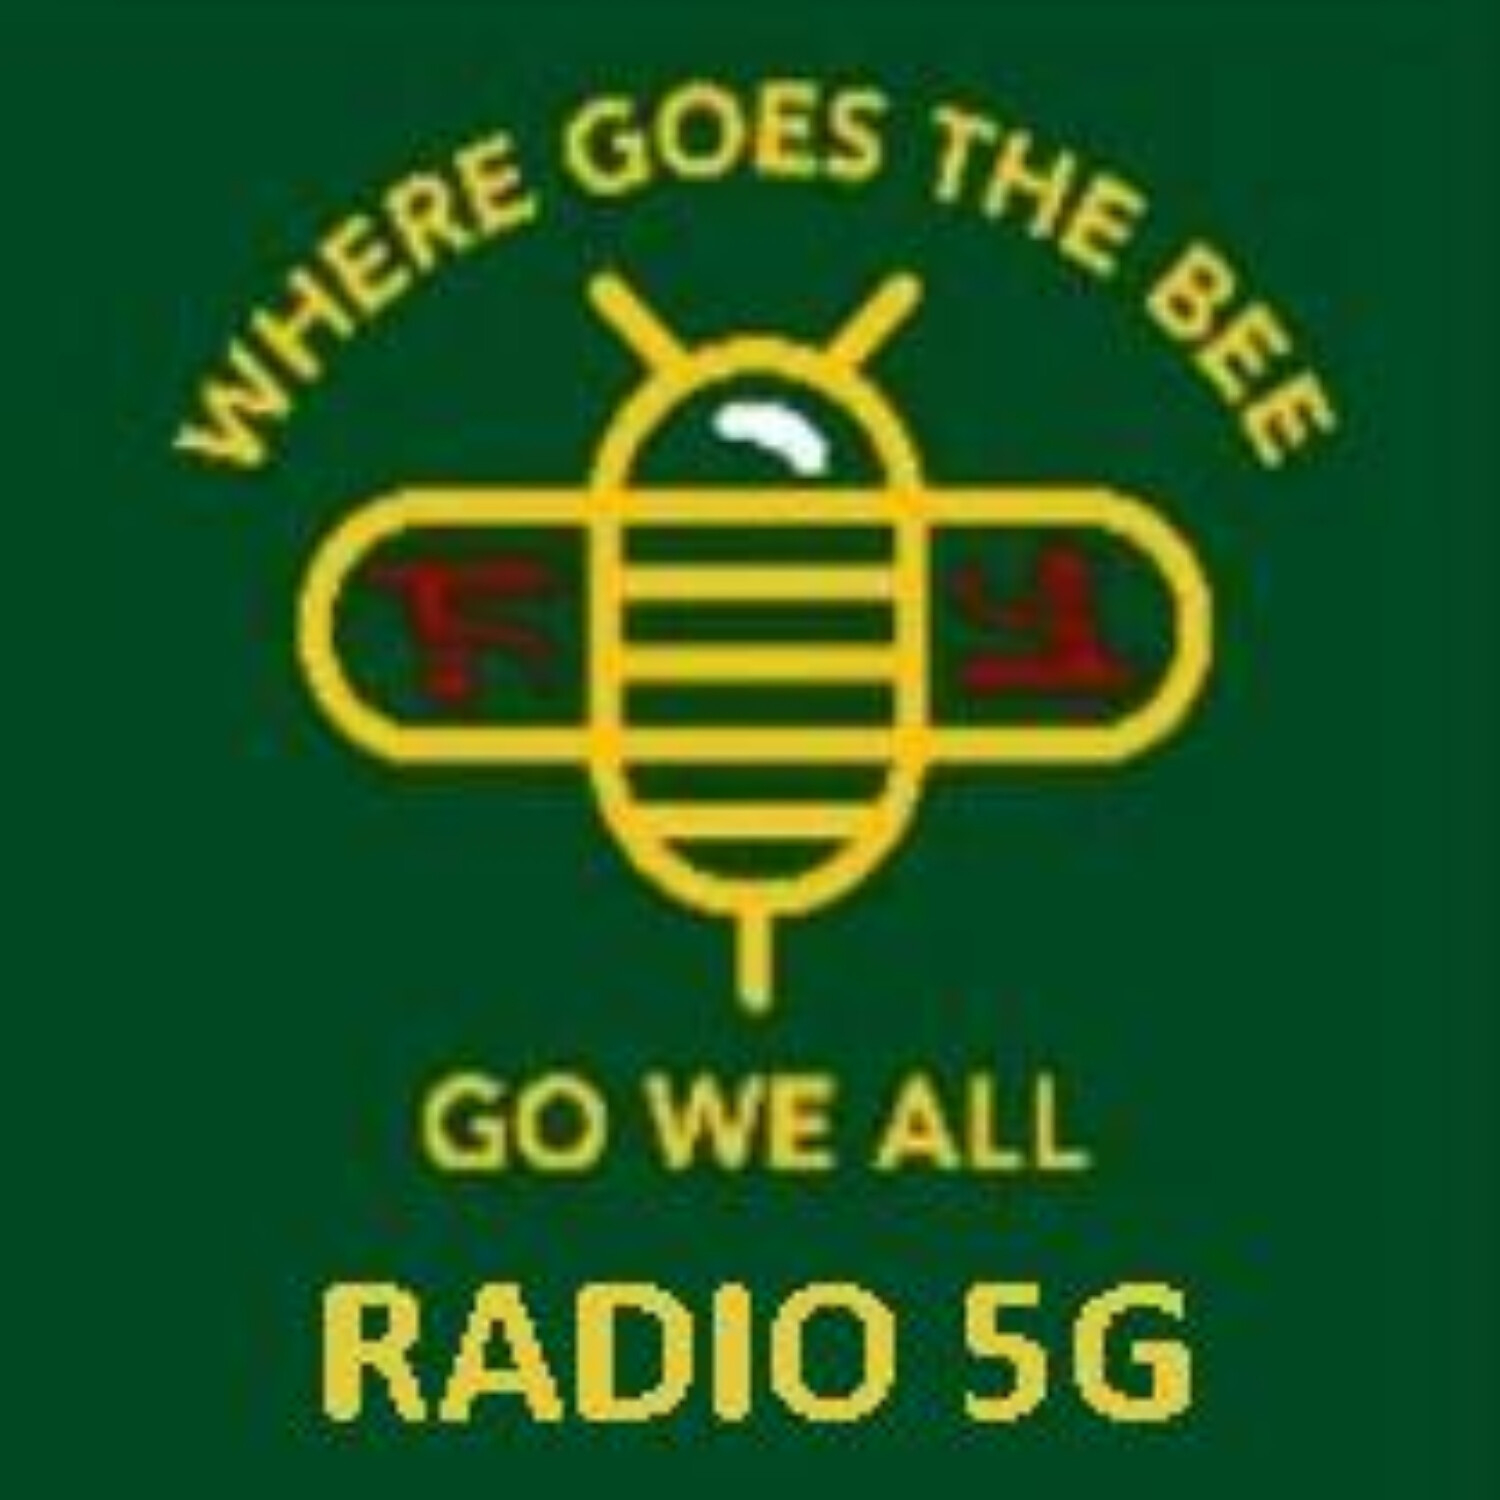 RADIO 5G 1/18/23 -  Mark Steele on 5G: LONG RANGE URBAN TARGET ACQUISITION/KILL SYSTEM